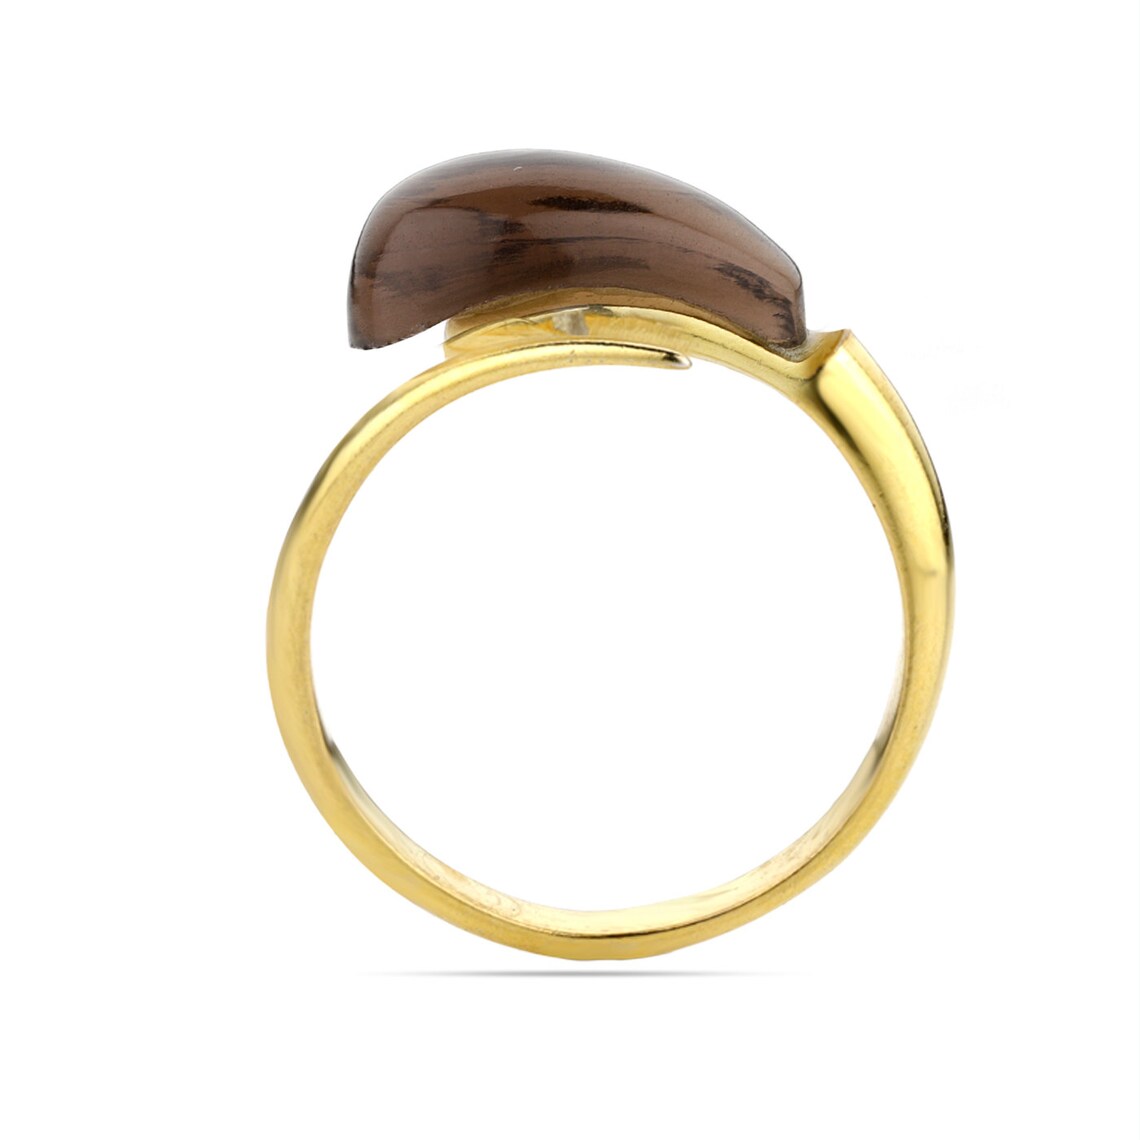 Smoky Quartz Ring - Dolphin Shape Ring - Smokey Quartz Gold Ring - Smoky Gemstone Ring - Stacking Ring - Adjustable